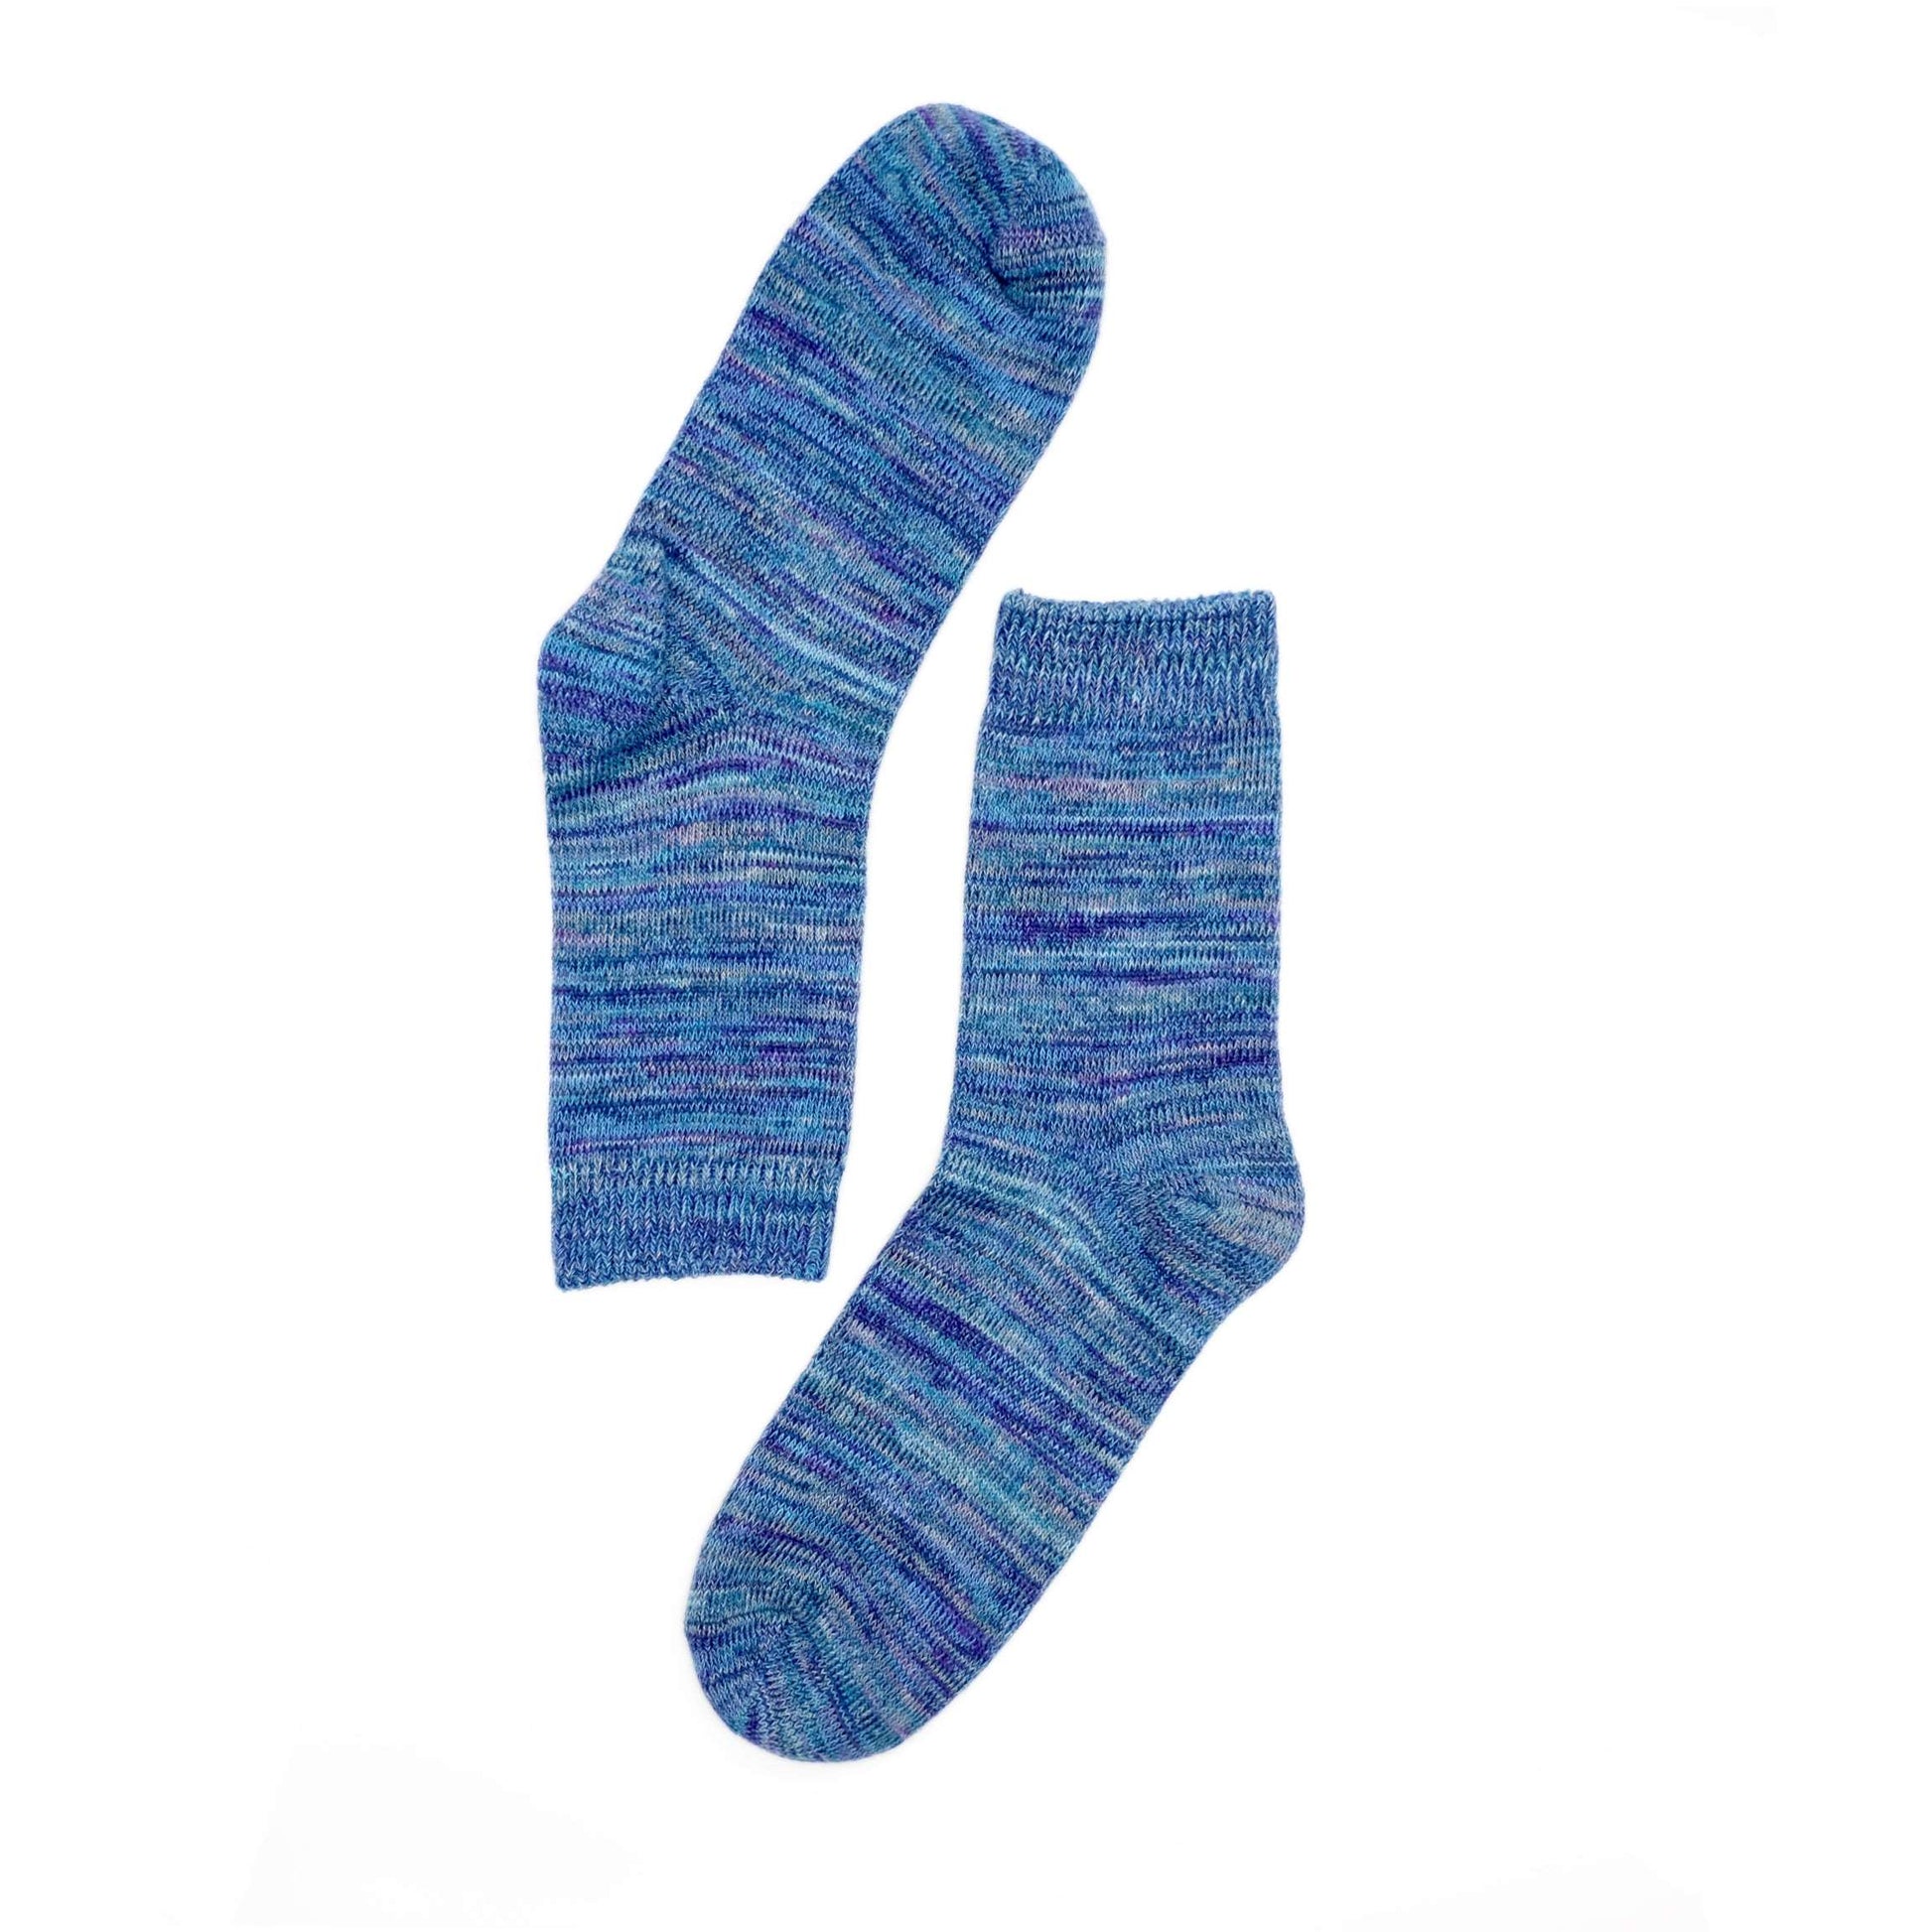 blue color thread sock